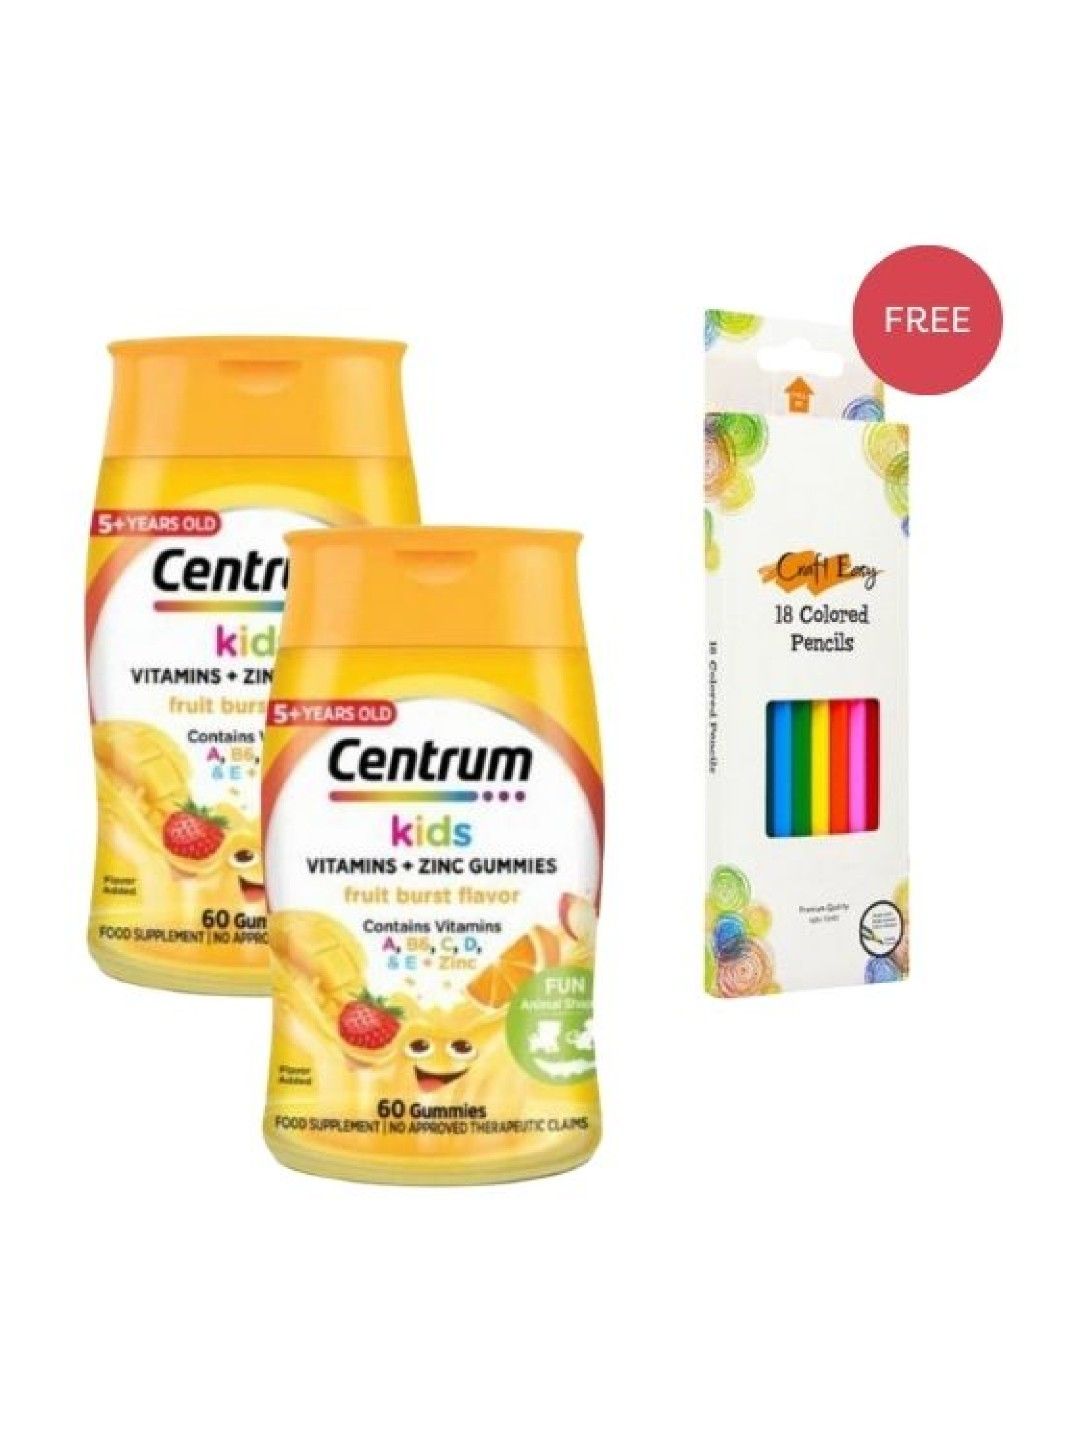 Centrum Kids [Buy 2 Get Free] Multivitamin Gummies Fruit Burst(60s), FREE Craft Easy Pencils